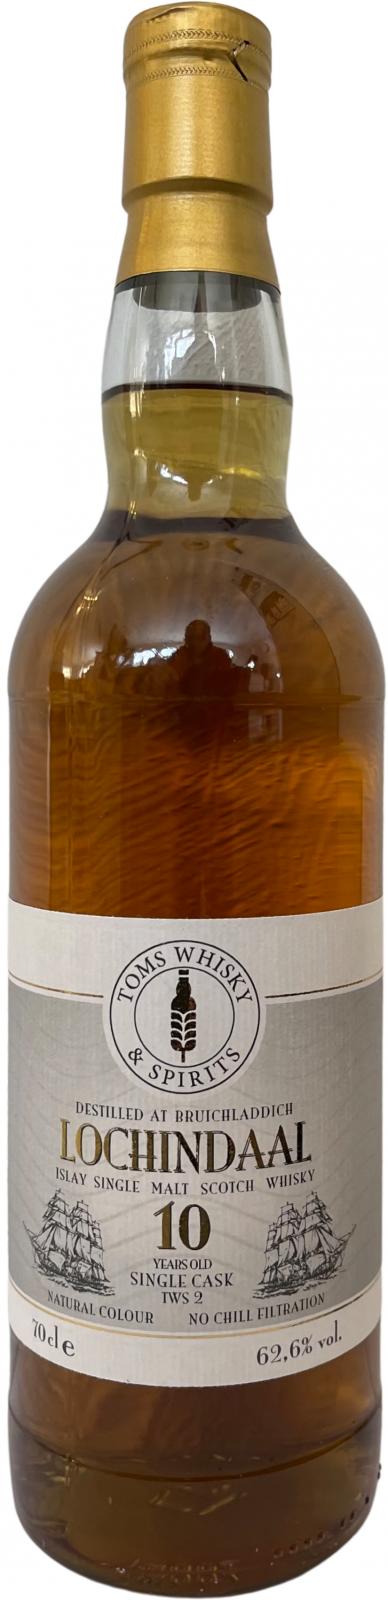 Lochindaal 2009 Fresh Bourbon Barrel R10/002-19 Tom's Whisky & Spirits 62.6% 700ml